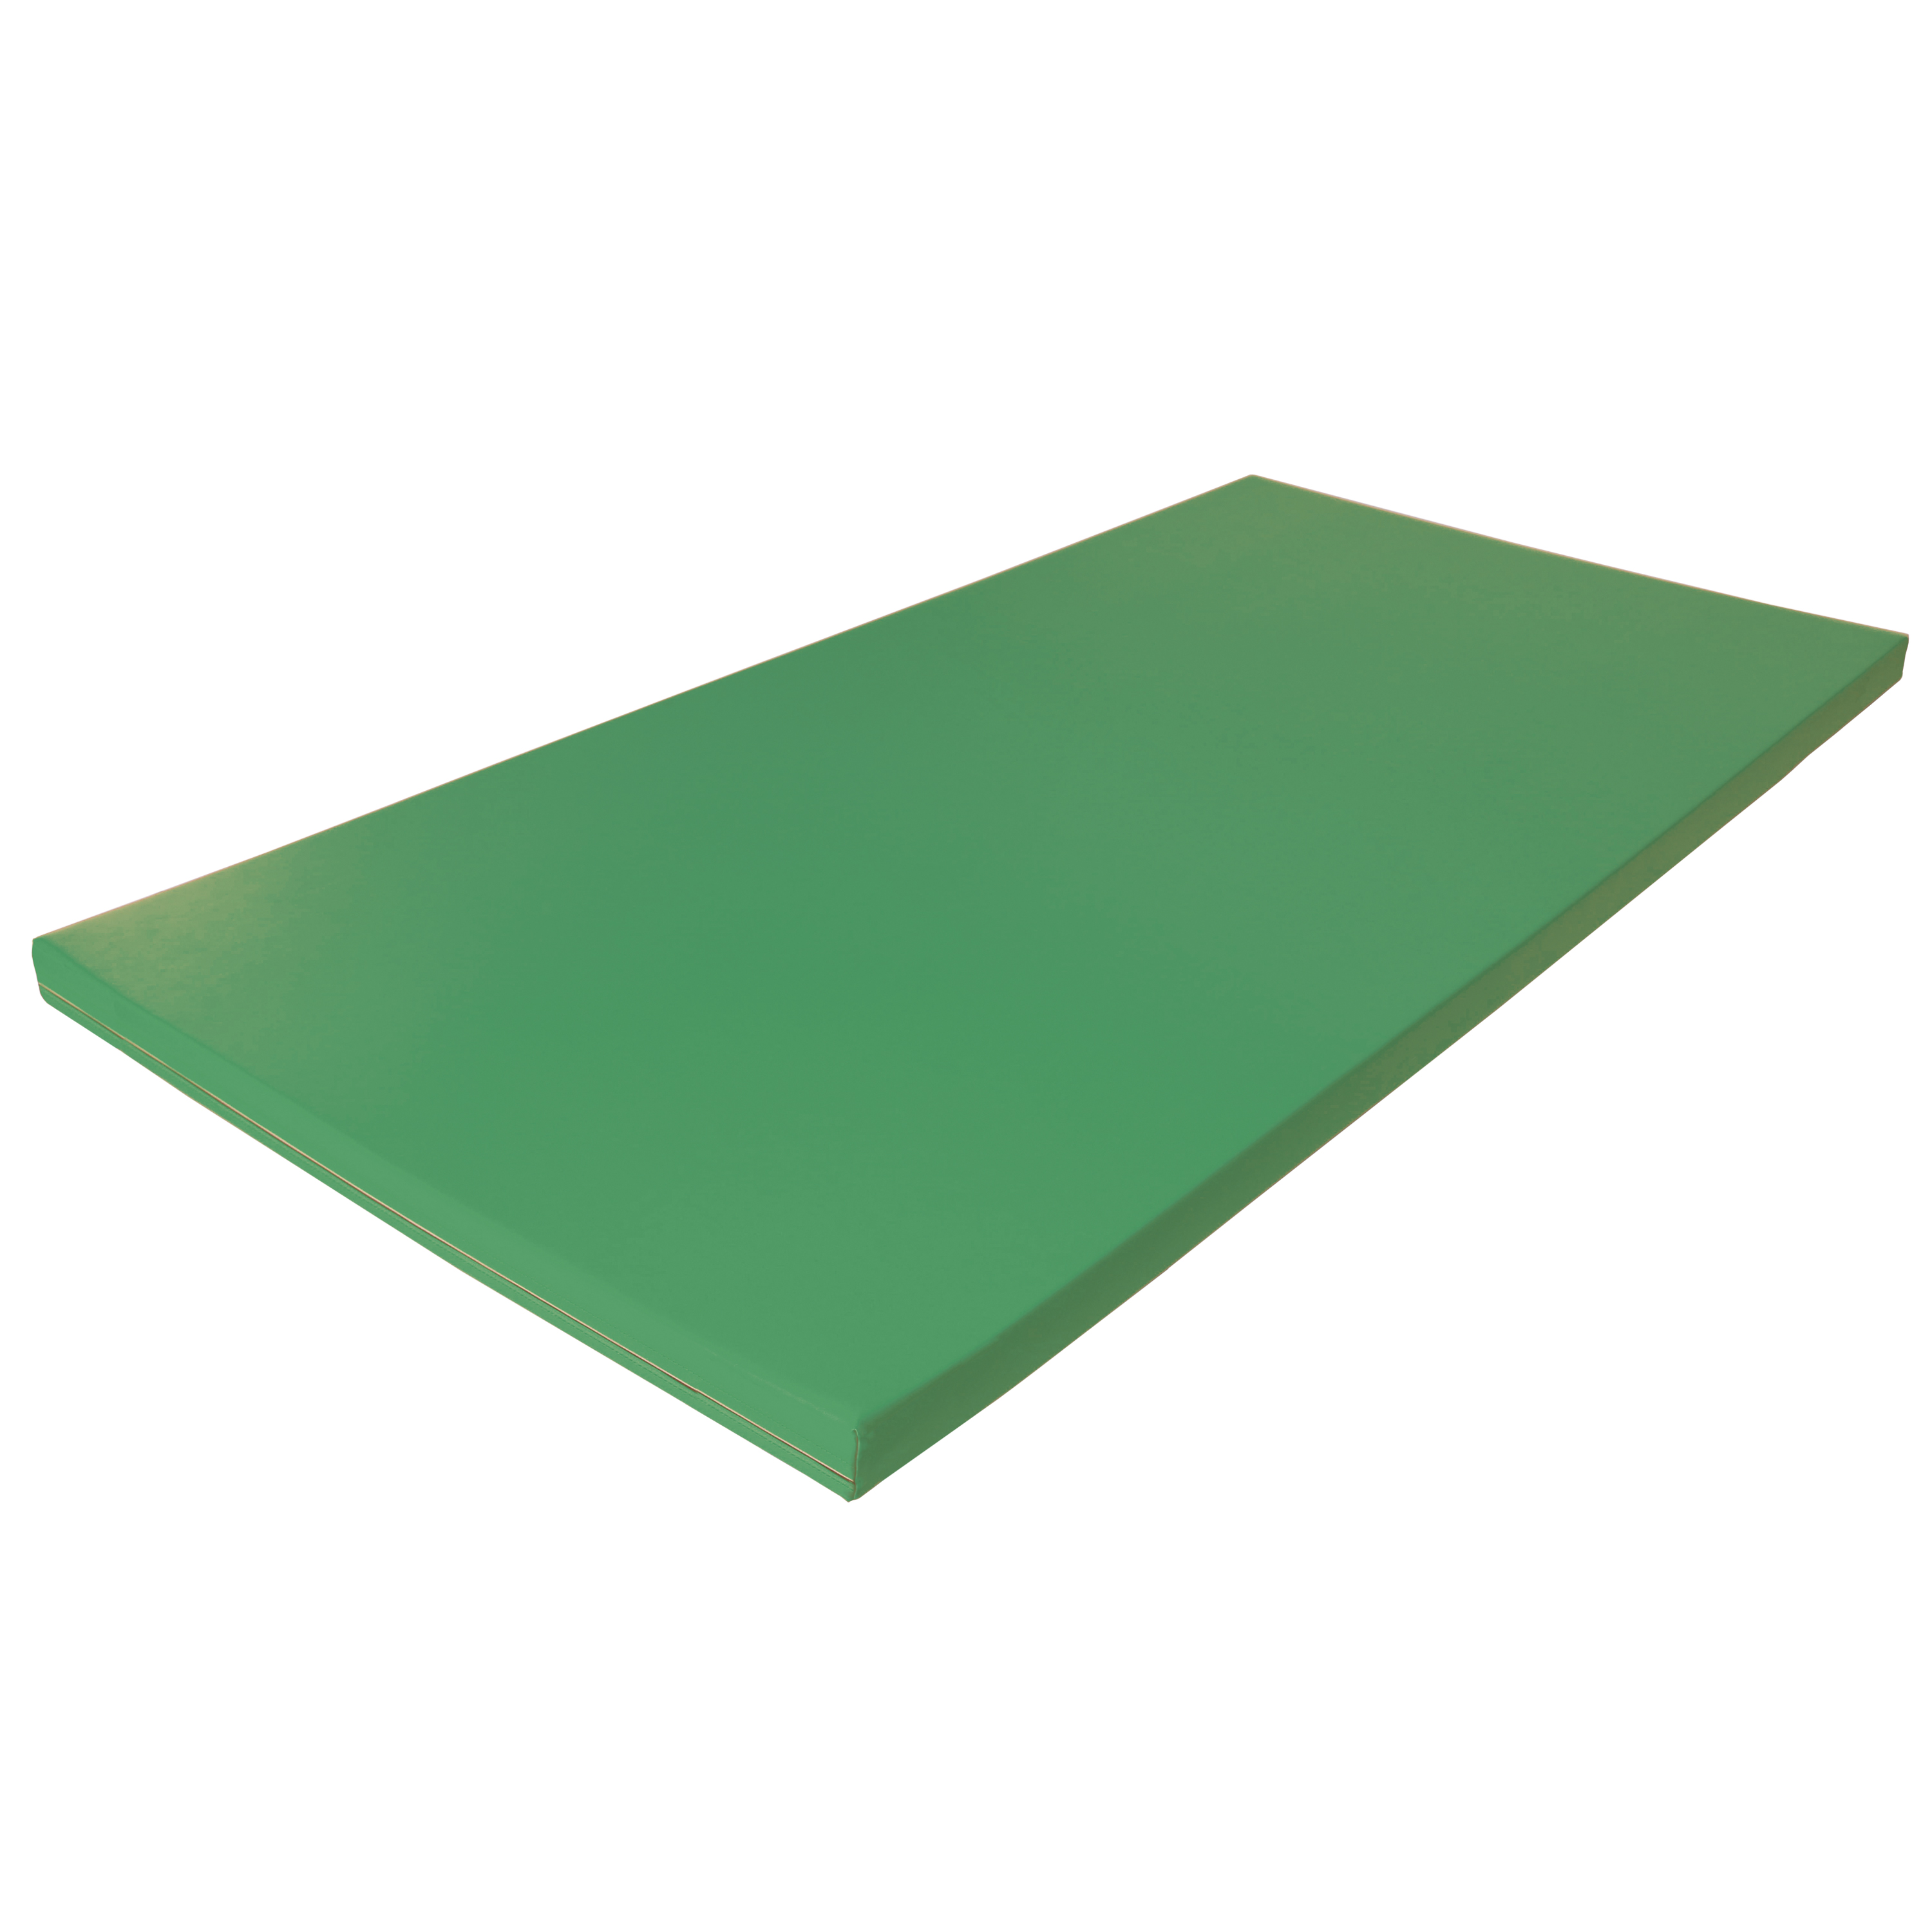 Fallschutzmatte Superleicht 'grün', 200 x 100 cm